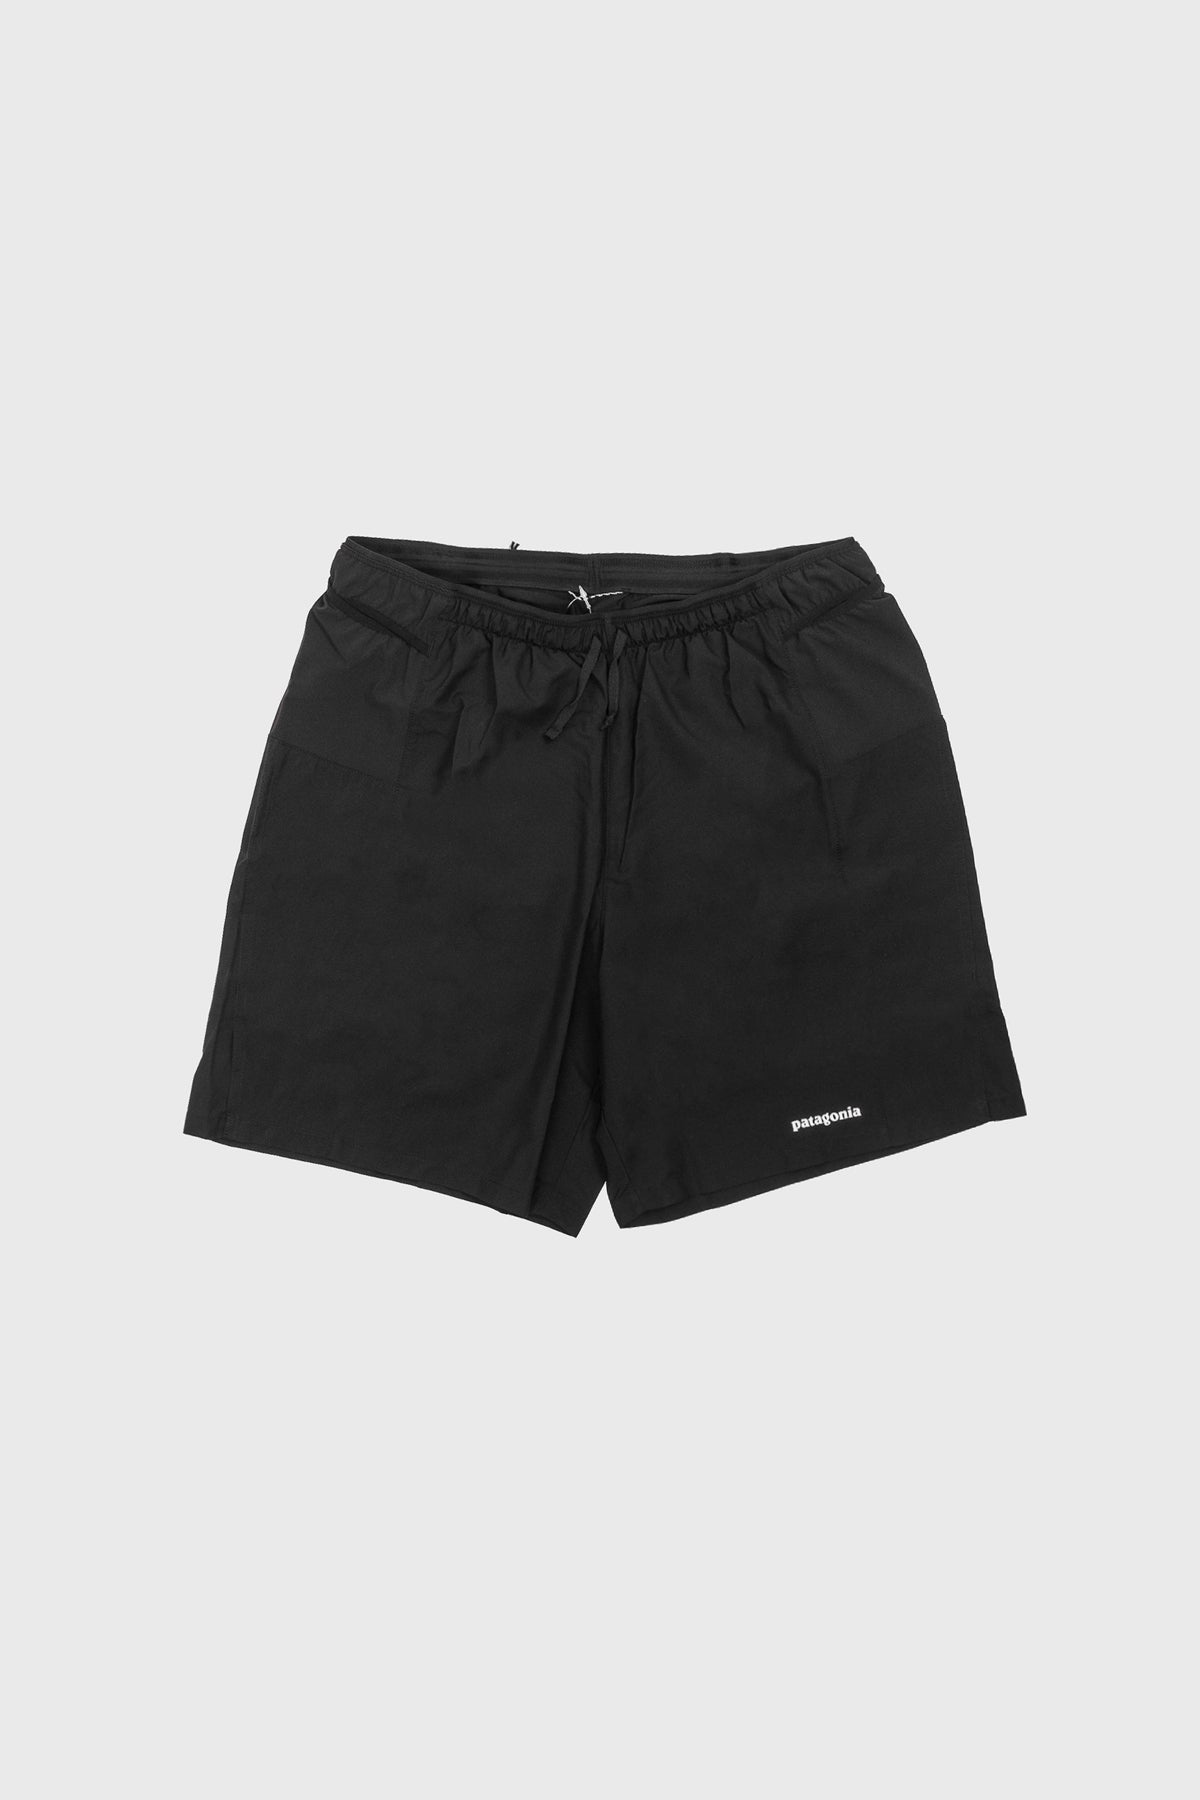 patagonia - strider pro shorts 7&quot;